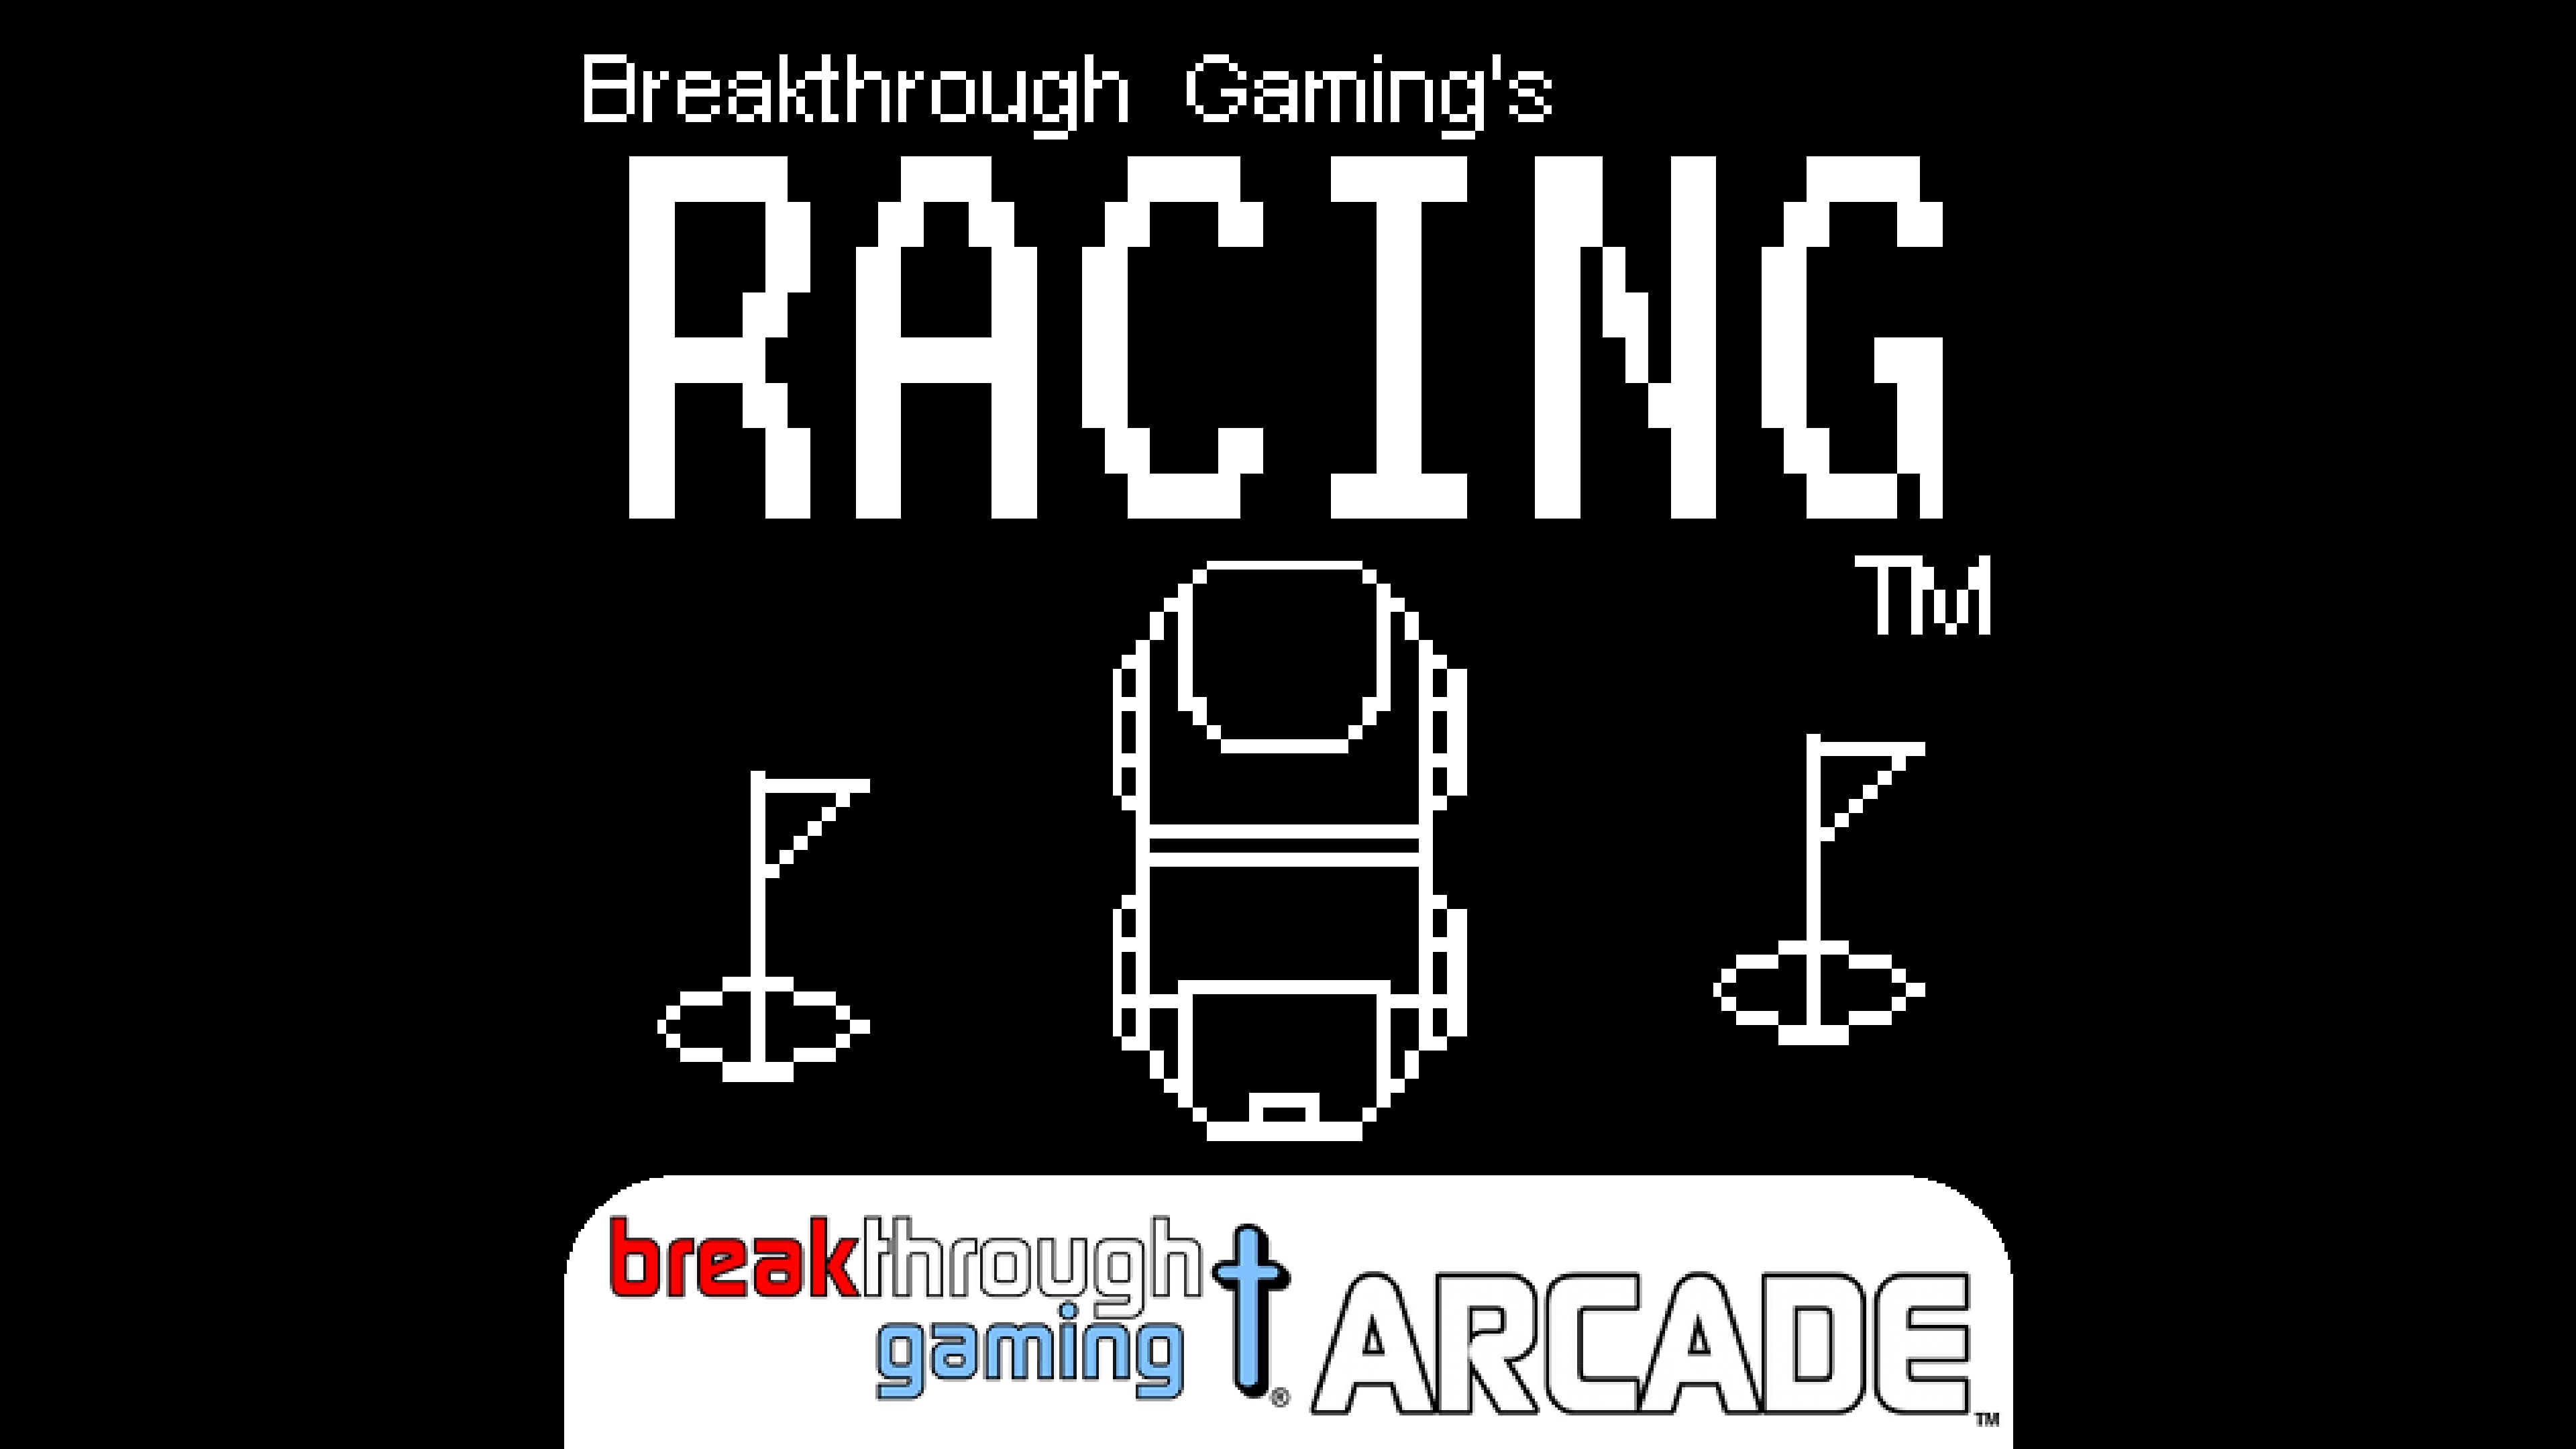 Racing - Breakthrough Gaming Arcade